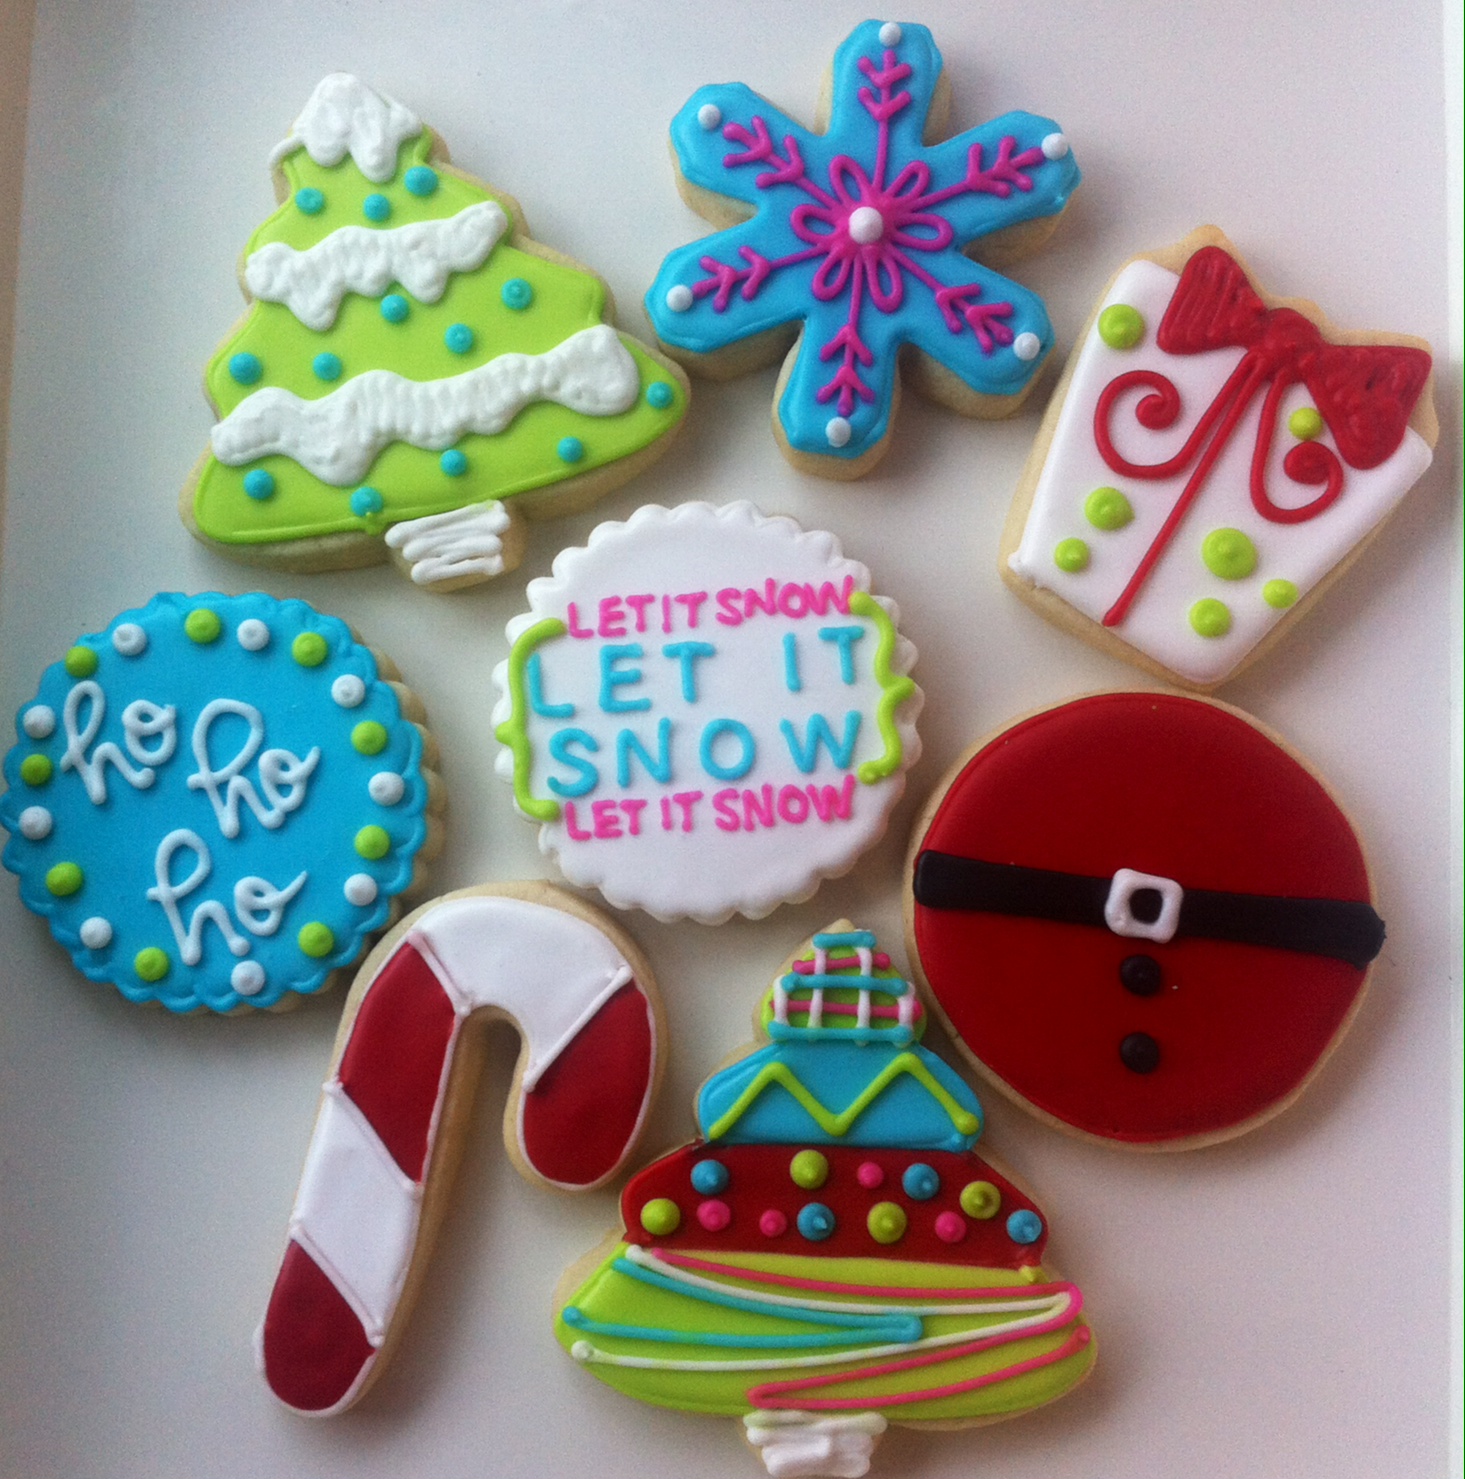 Custom Christmas Cookies - The Whimsy Cookie Company